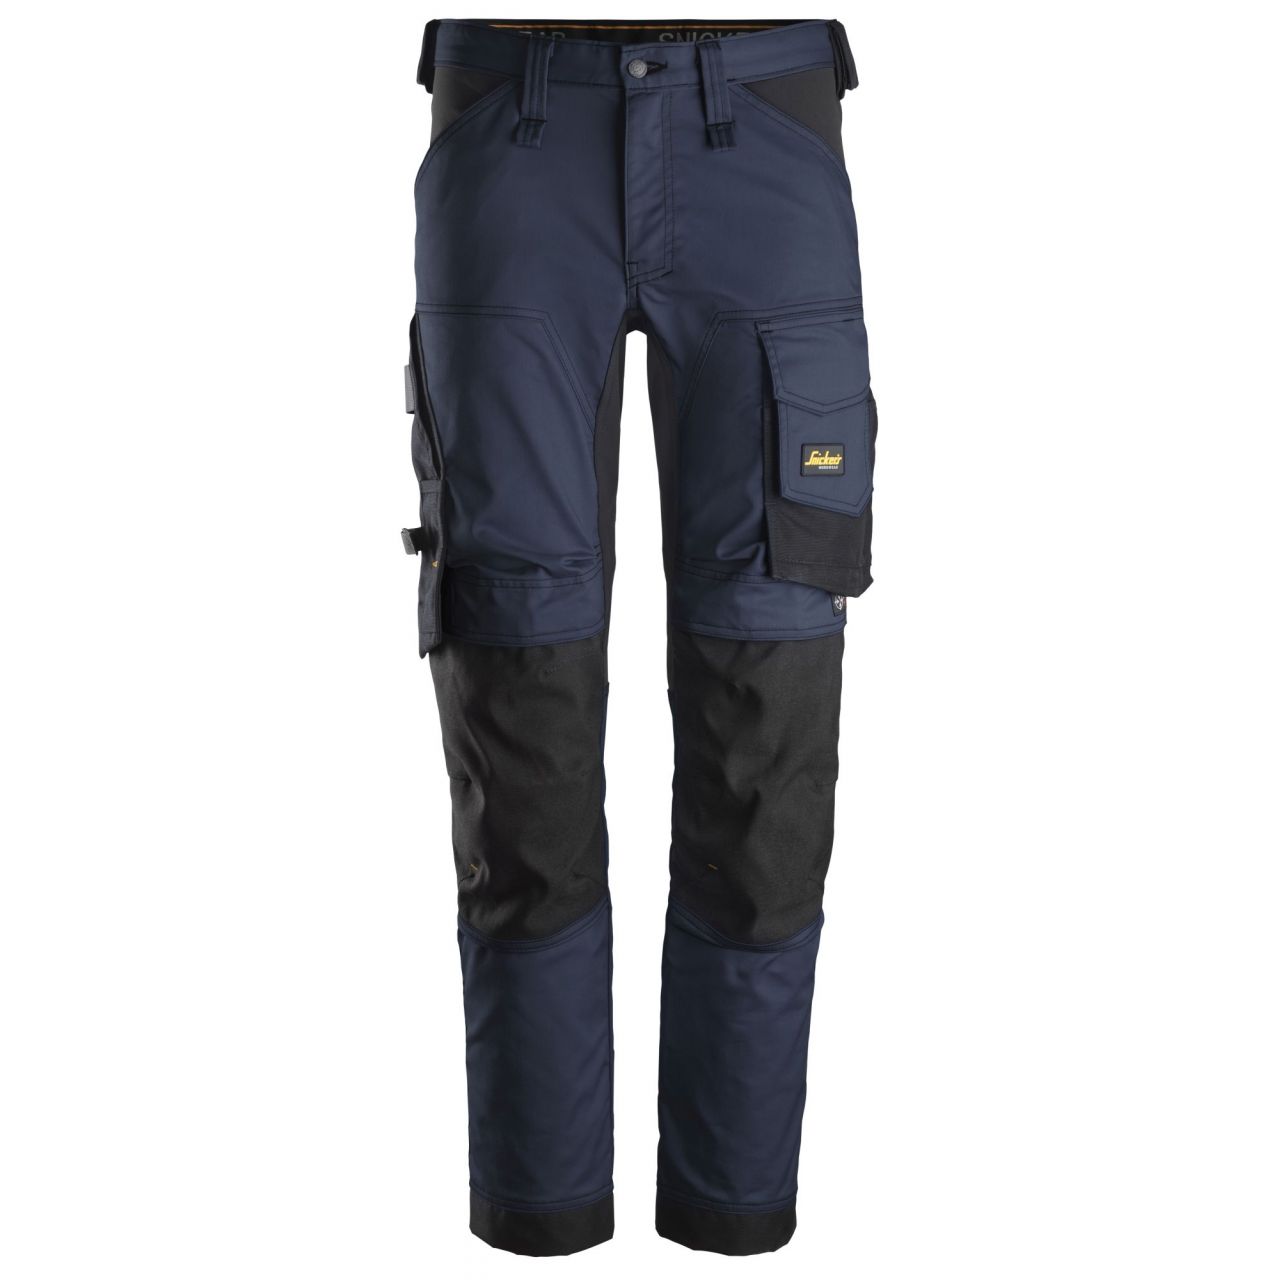 Pantalones elásticos AllroundWork Azul Marino-Negro talla 56